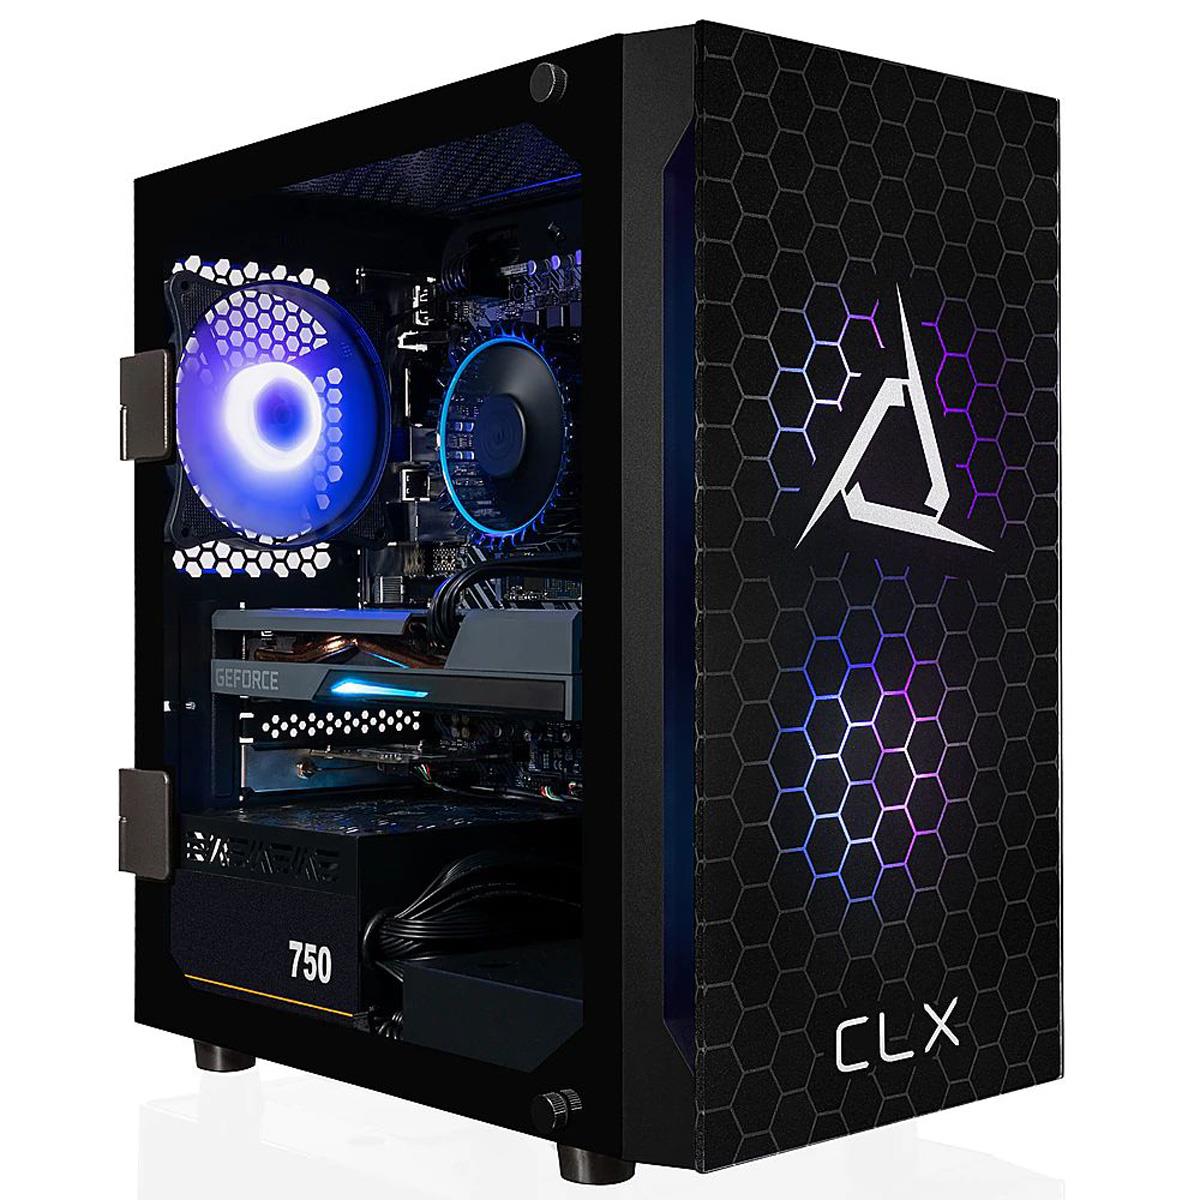 CLX SET Gaming Desktop: Picture 1